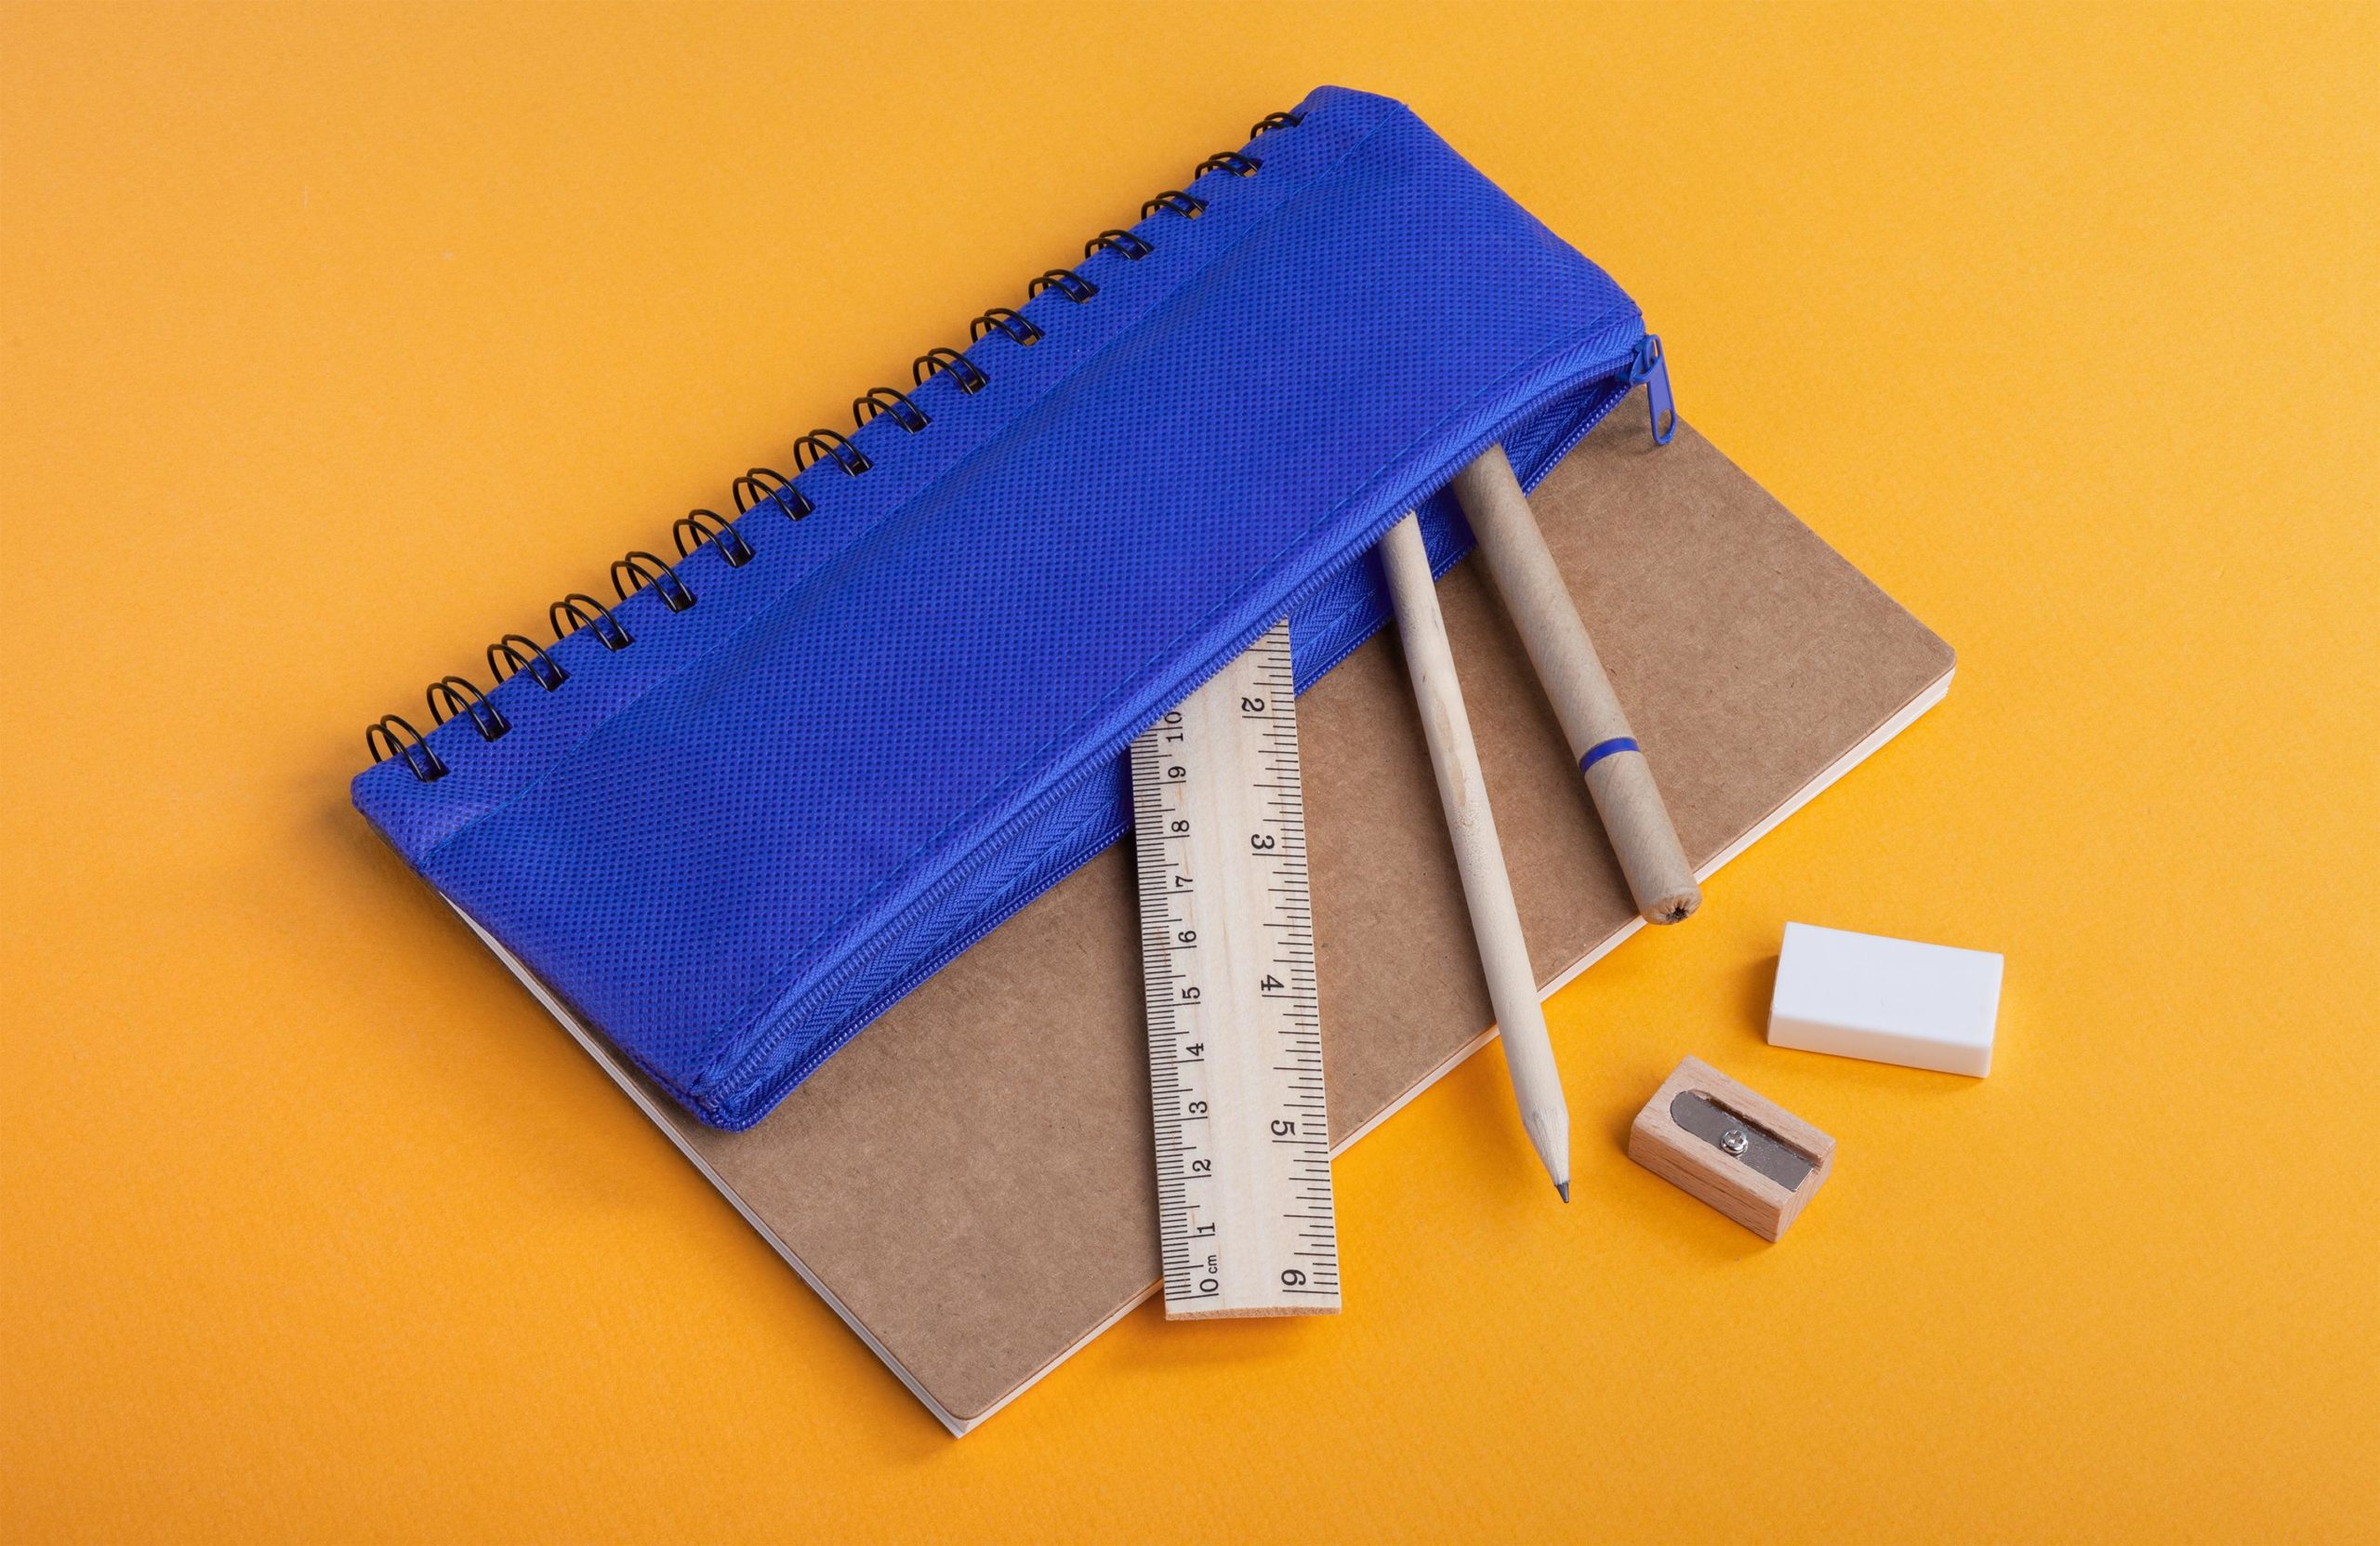 Блокнот "Full kit" с пеналом и канцелярскими принадлежностями, цвет синий, фото 1